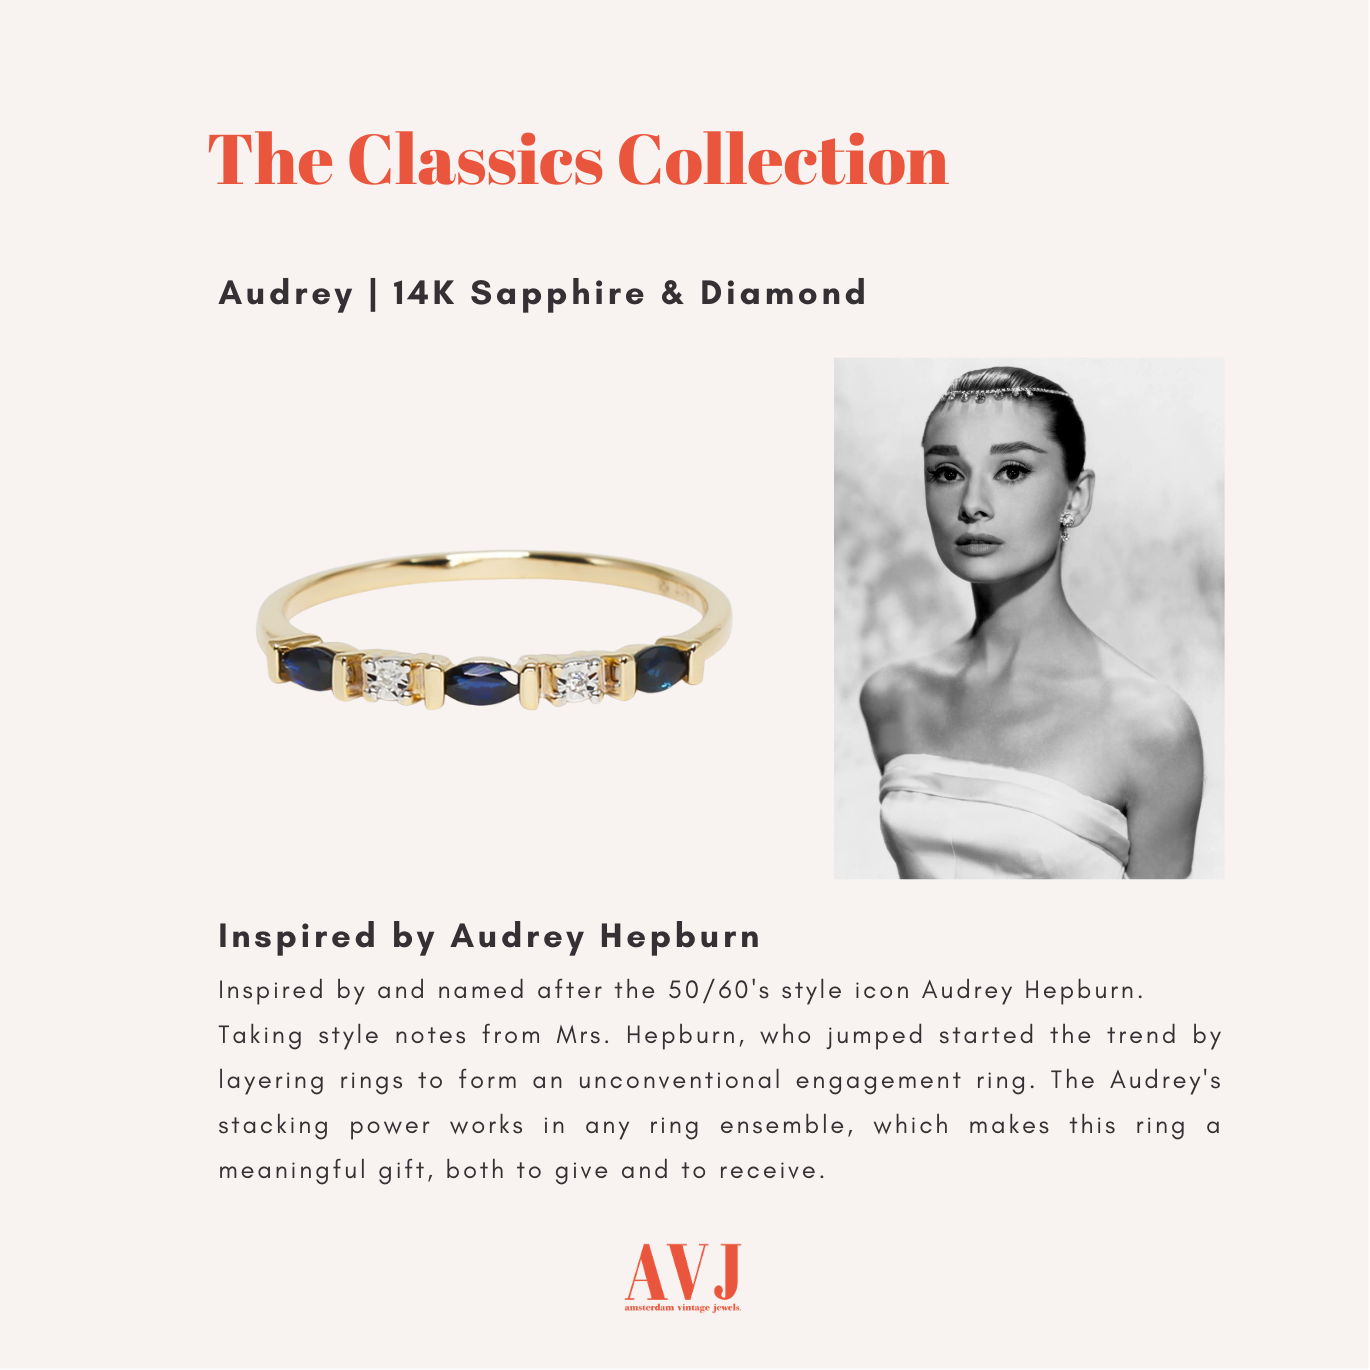 Audrey | 14K Sapphire and Diamond